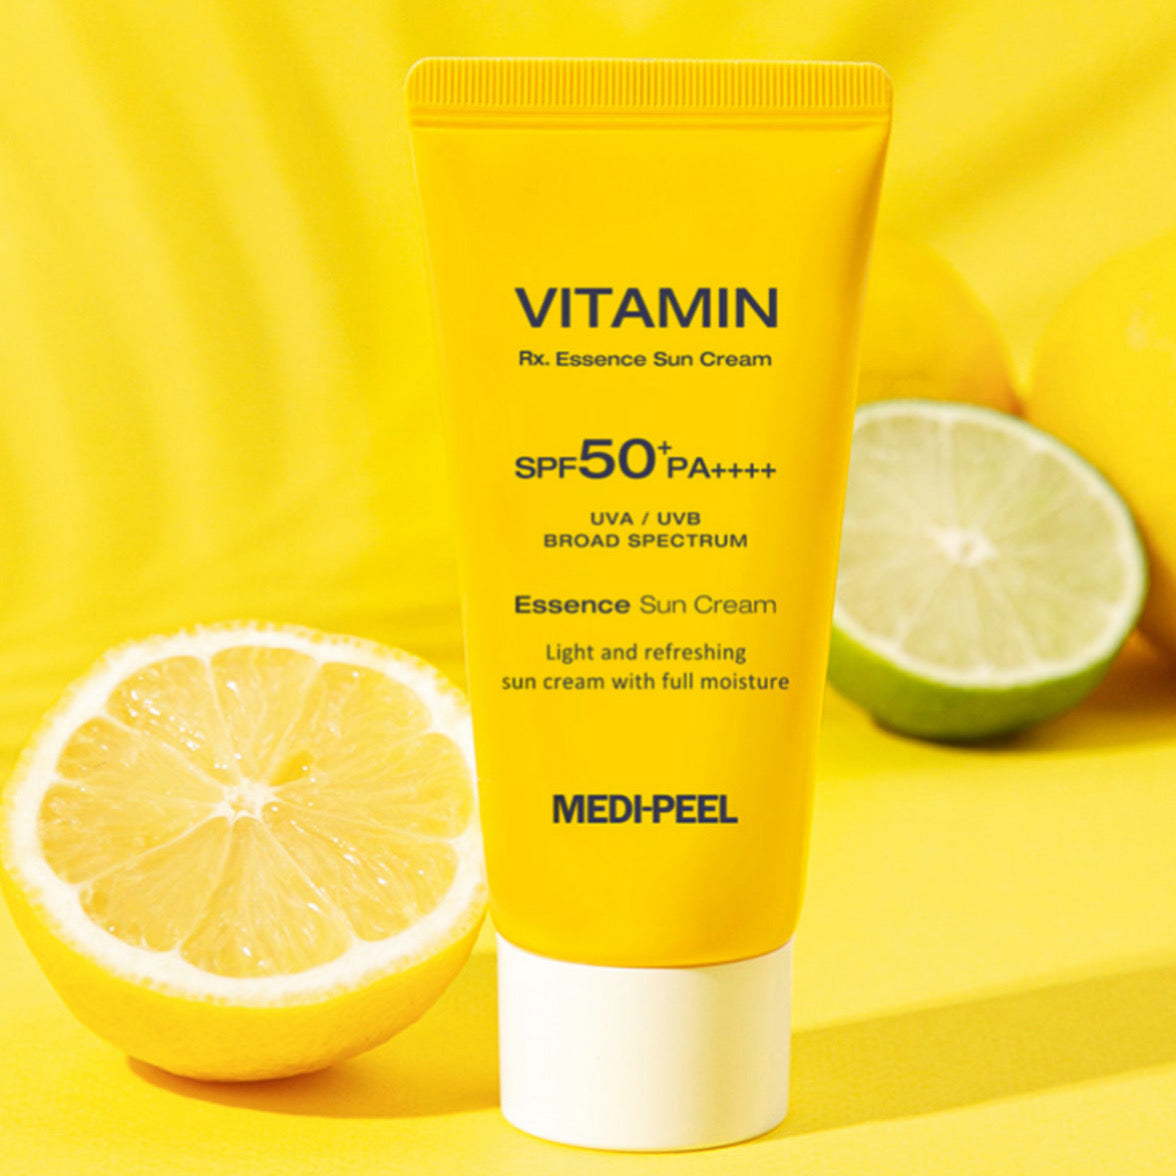 Vitamin essence Sun cream SPF50+/PA++++ by Medi-peel